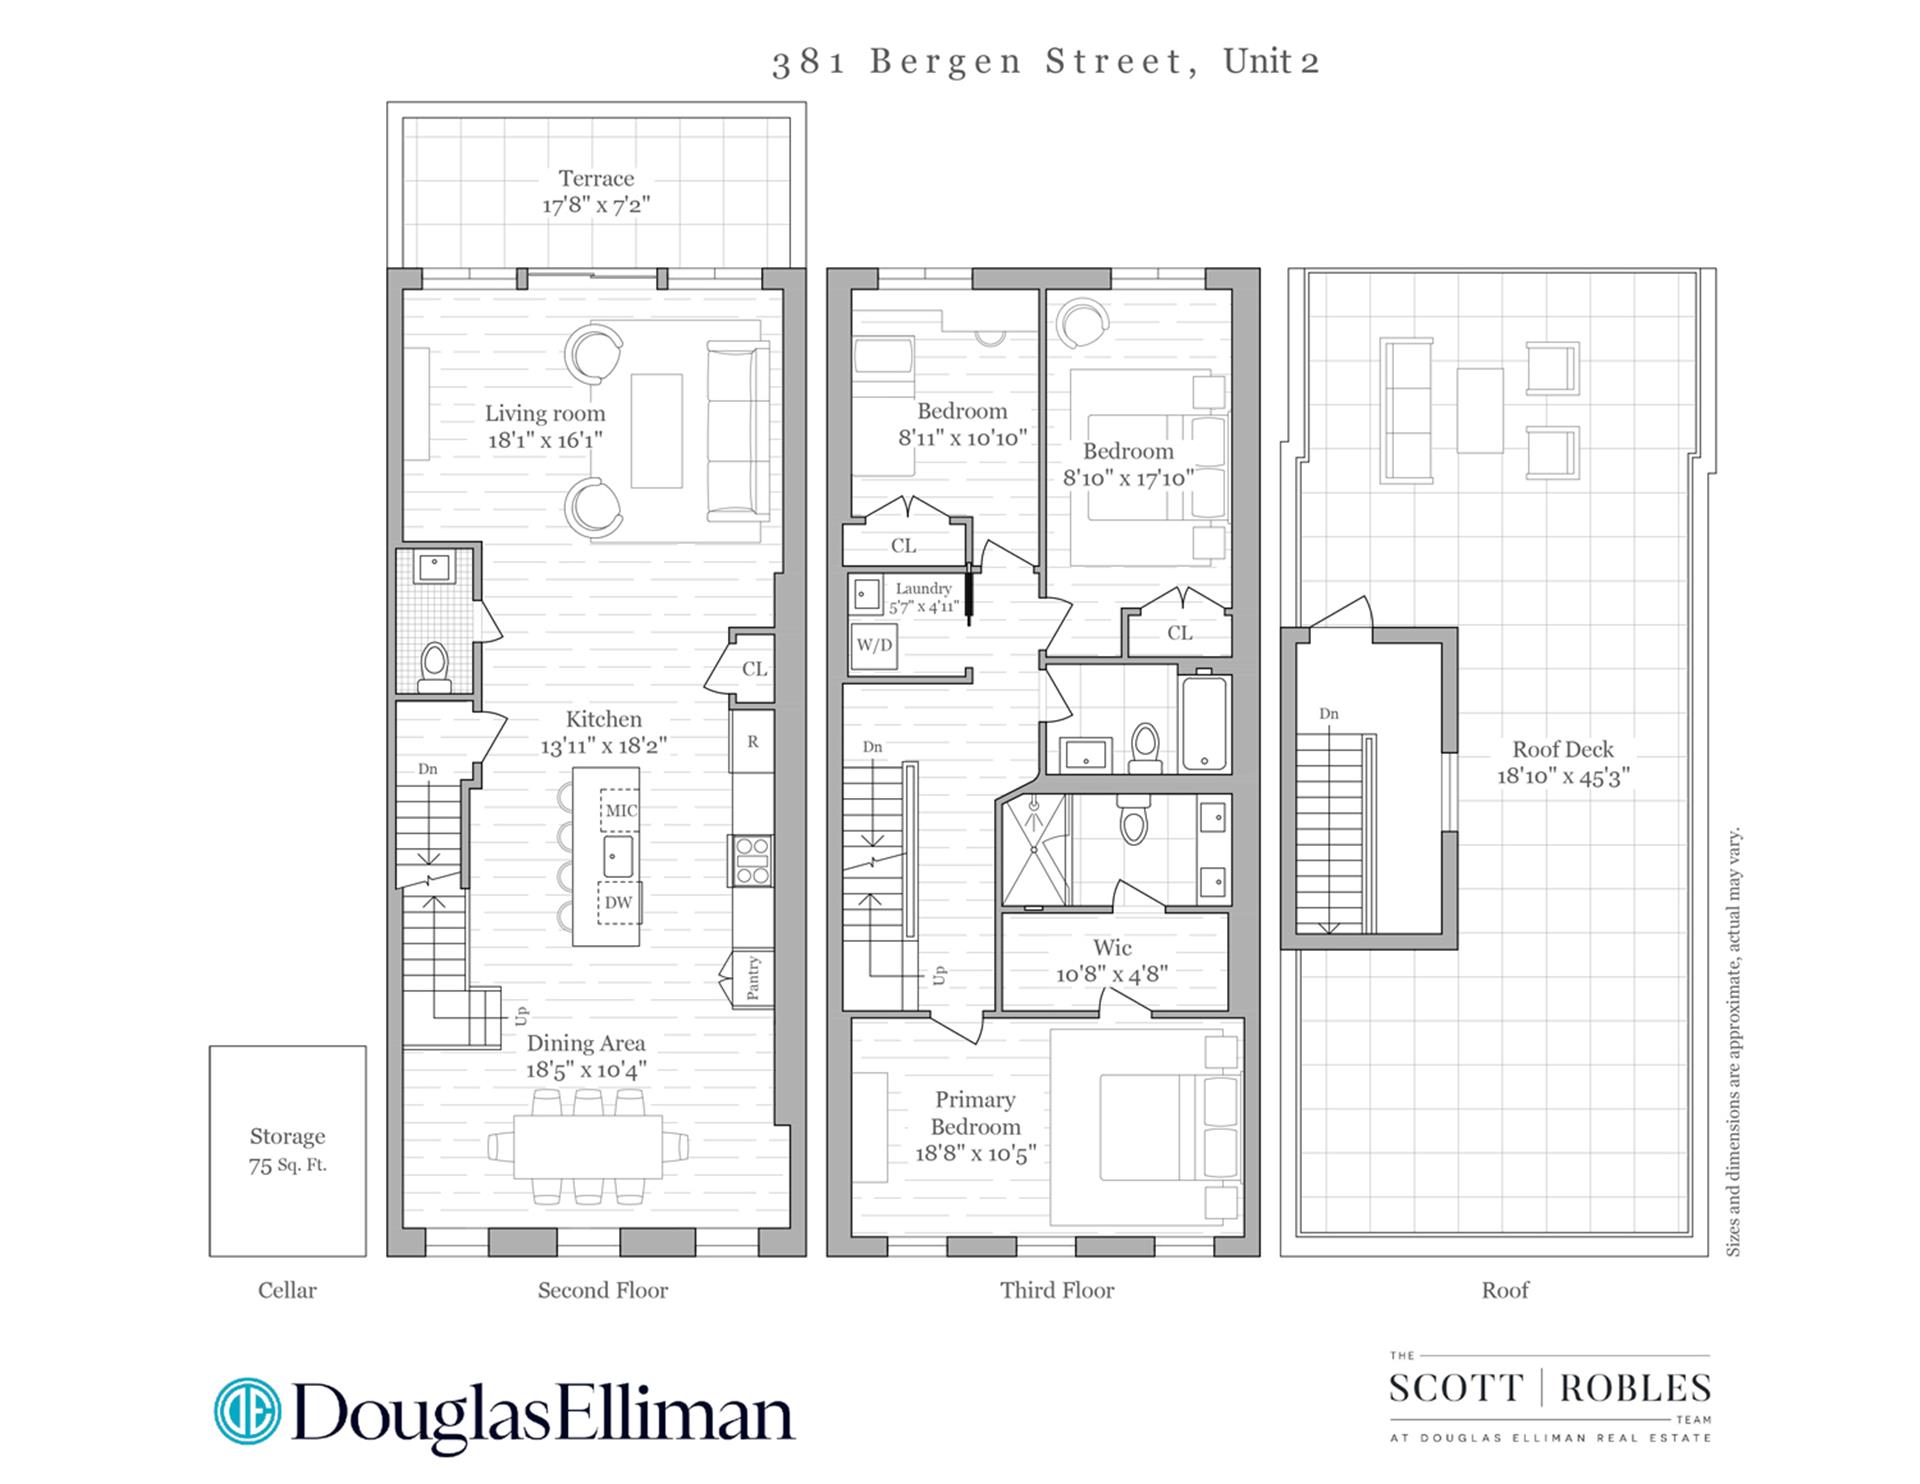 Floorplan for 381 Bergen Street, 2